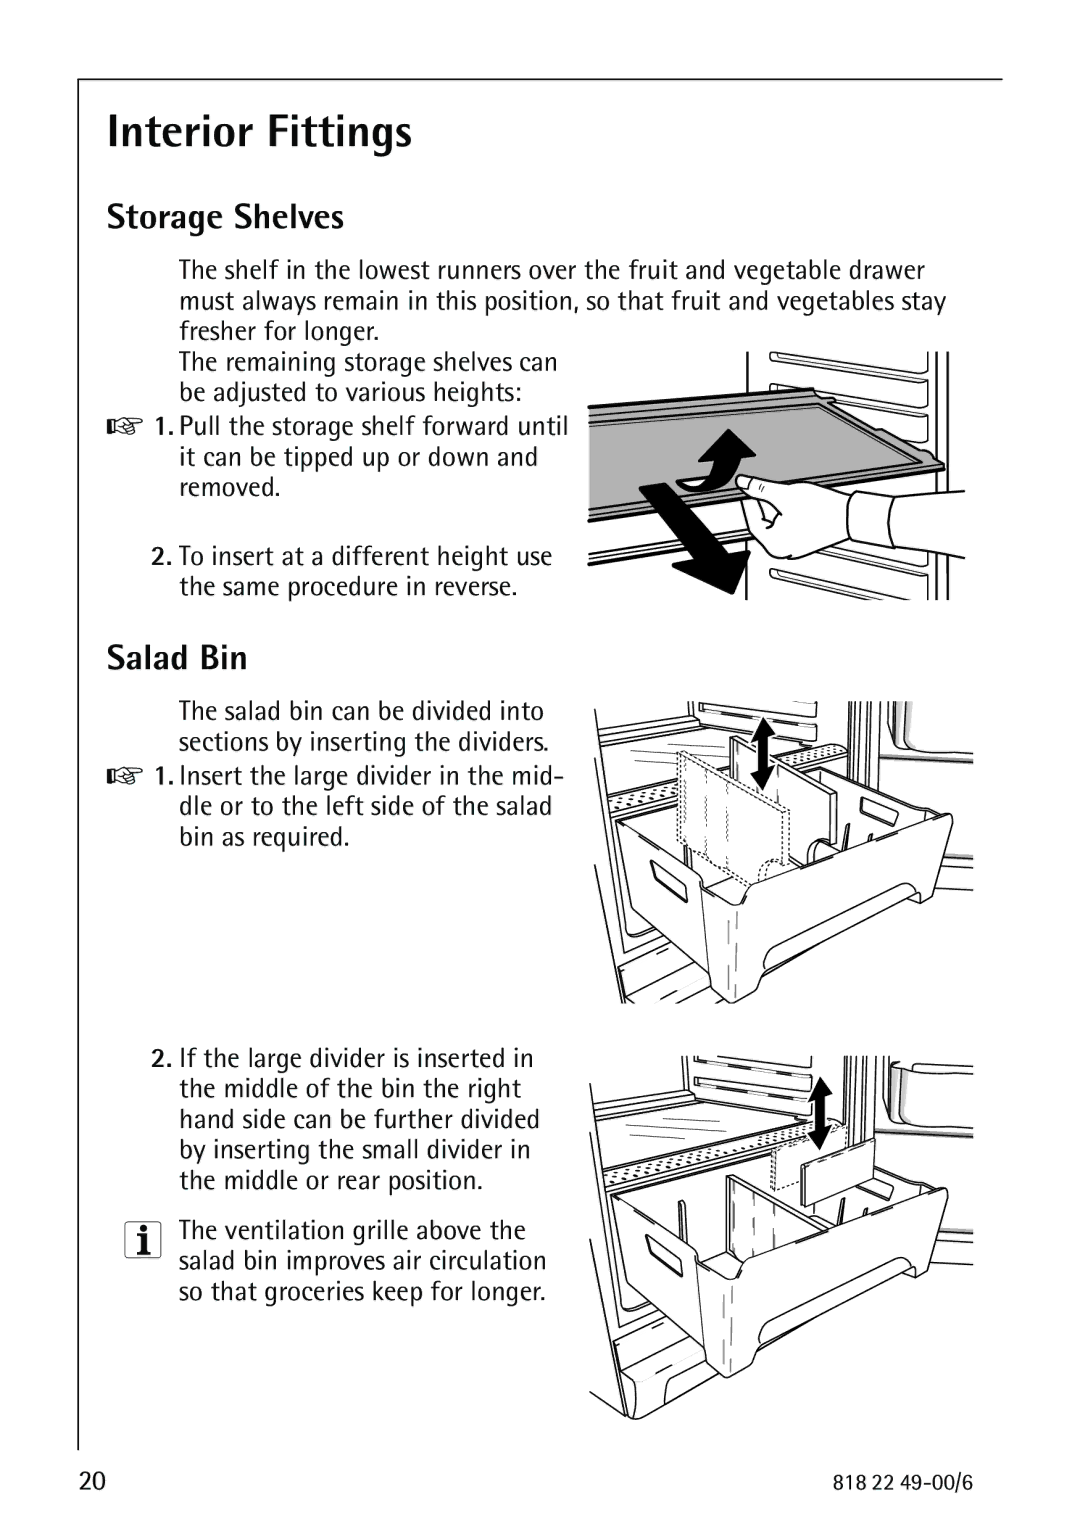 Electrolux SANTO 3778-8 KA manual Interior Fittings, Storage Shelves, Salad Bin 